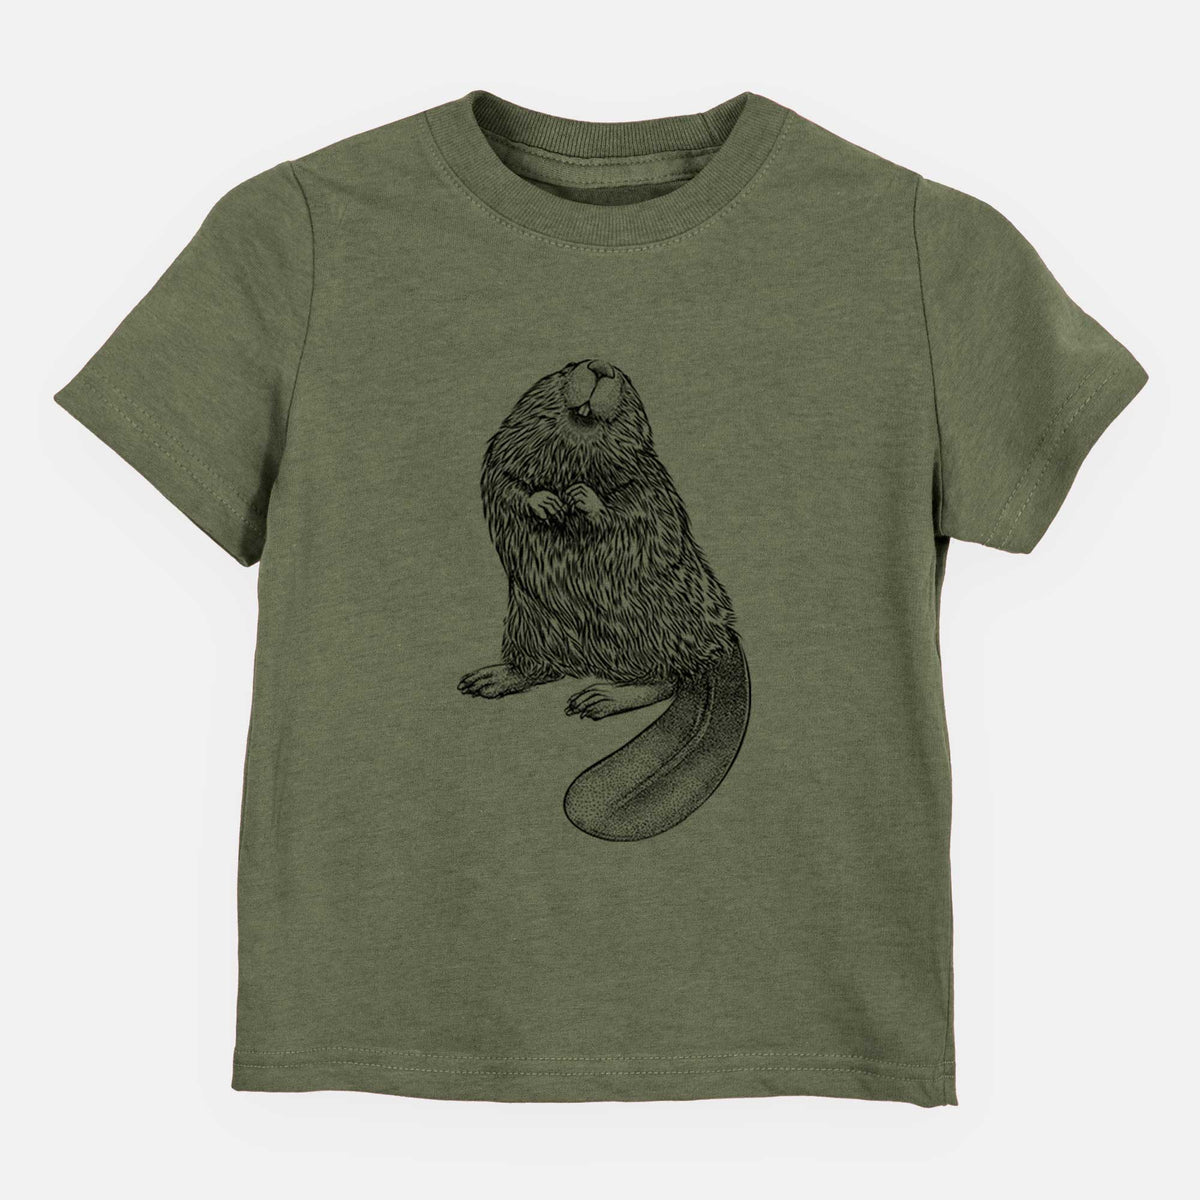 North American Beaver - Castor canadensis - Kids Shirt